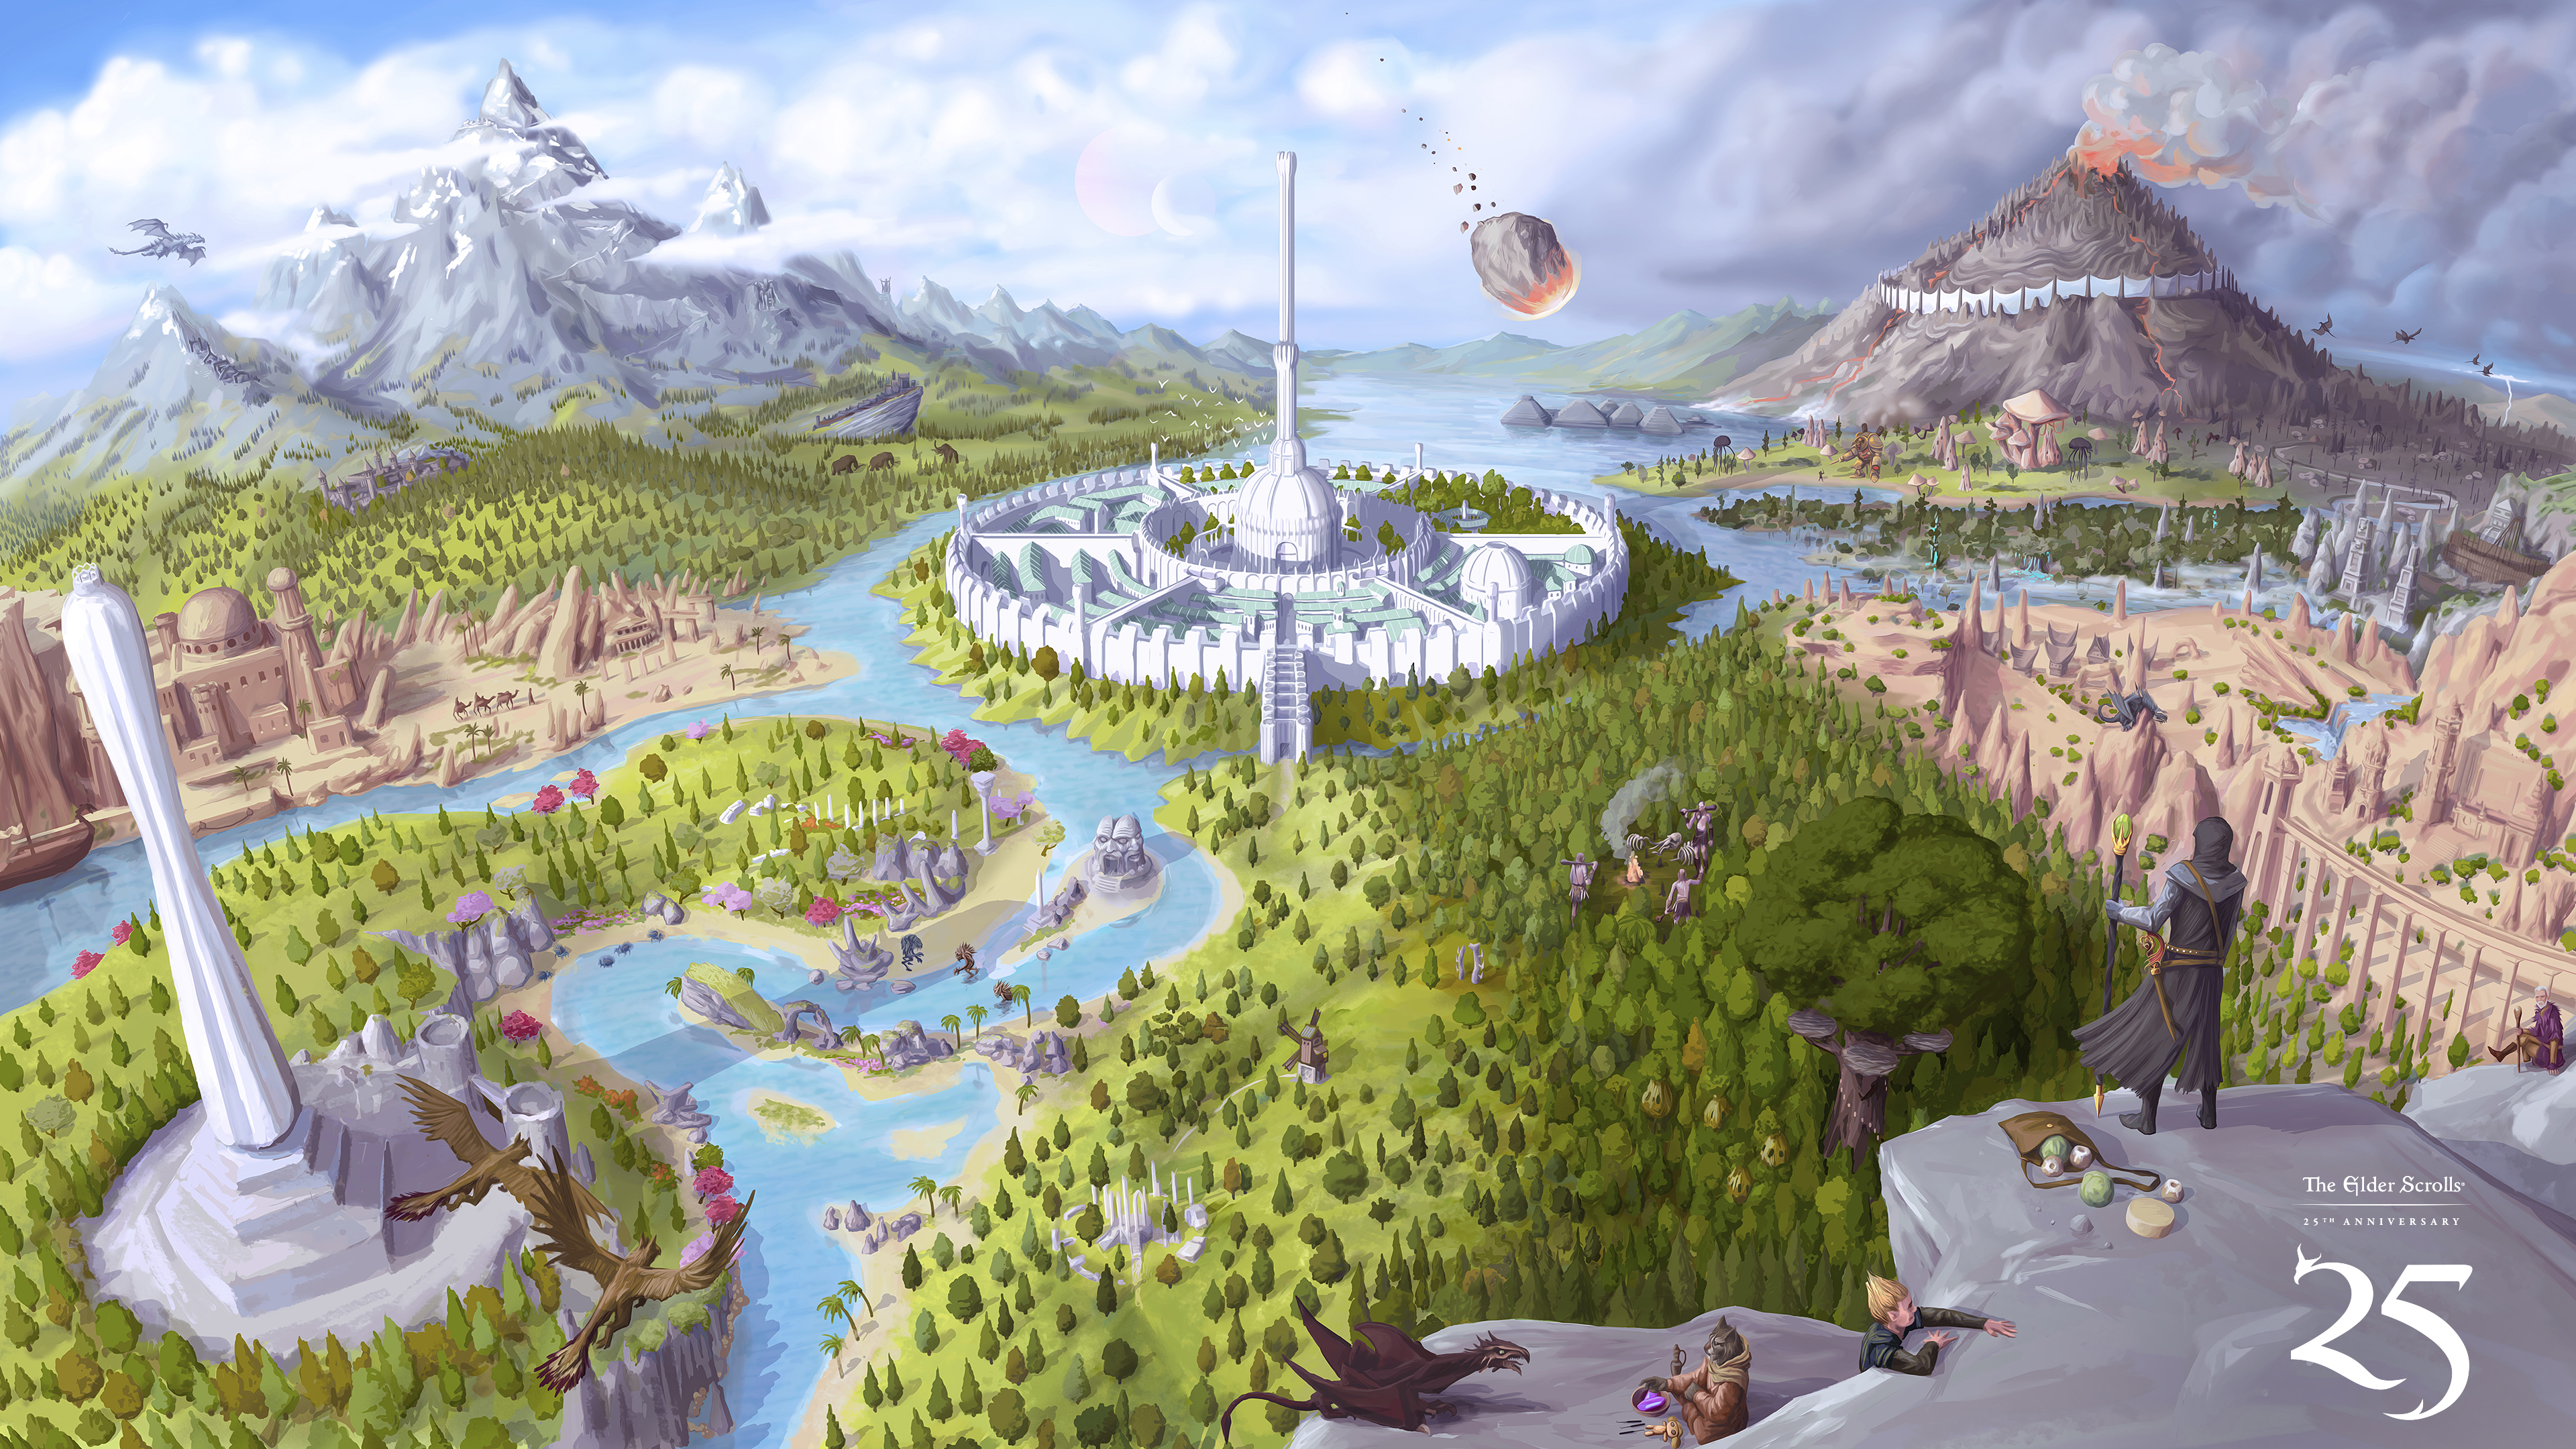 Tamriel Video Games The Elder Scrolls IV Oblivion Fantasy City 3840x2160